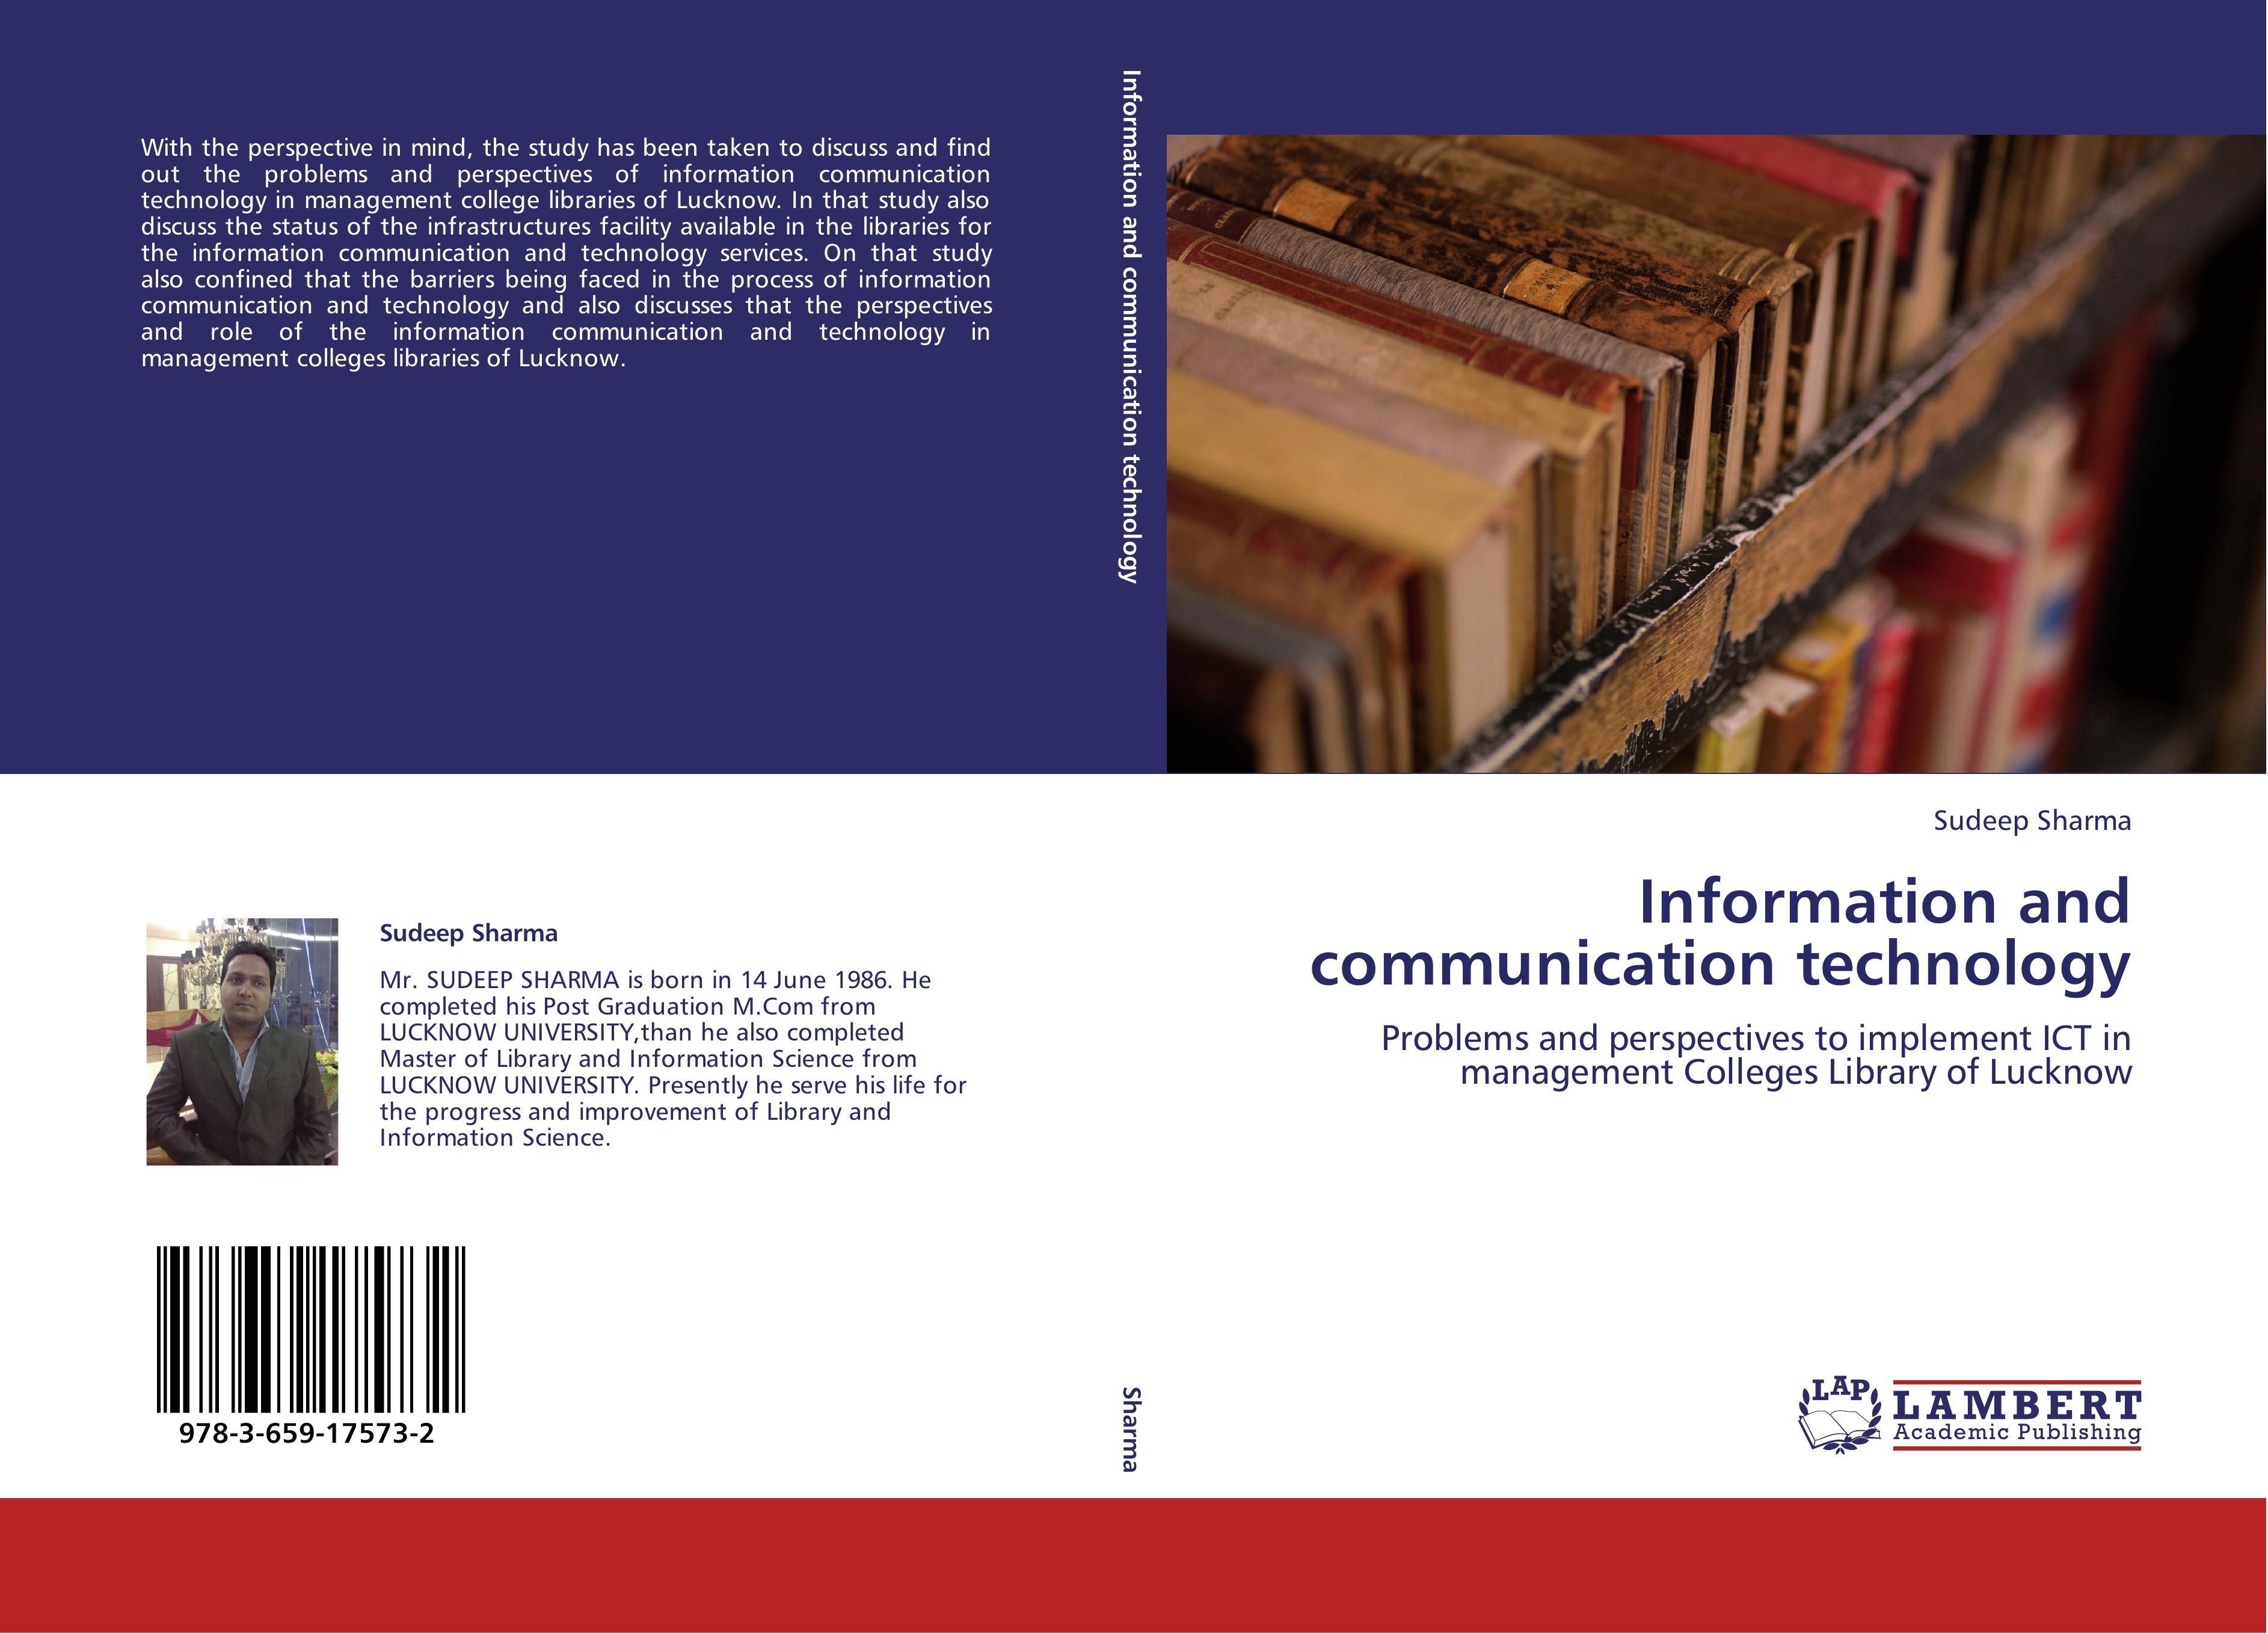 Information and communication technology - Sudeep Sharma